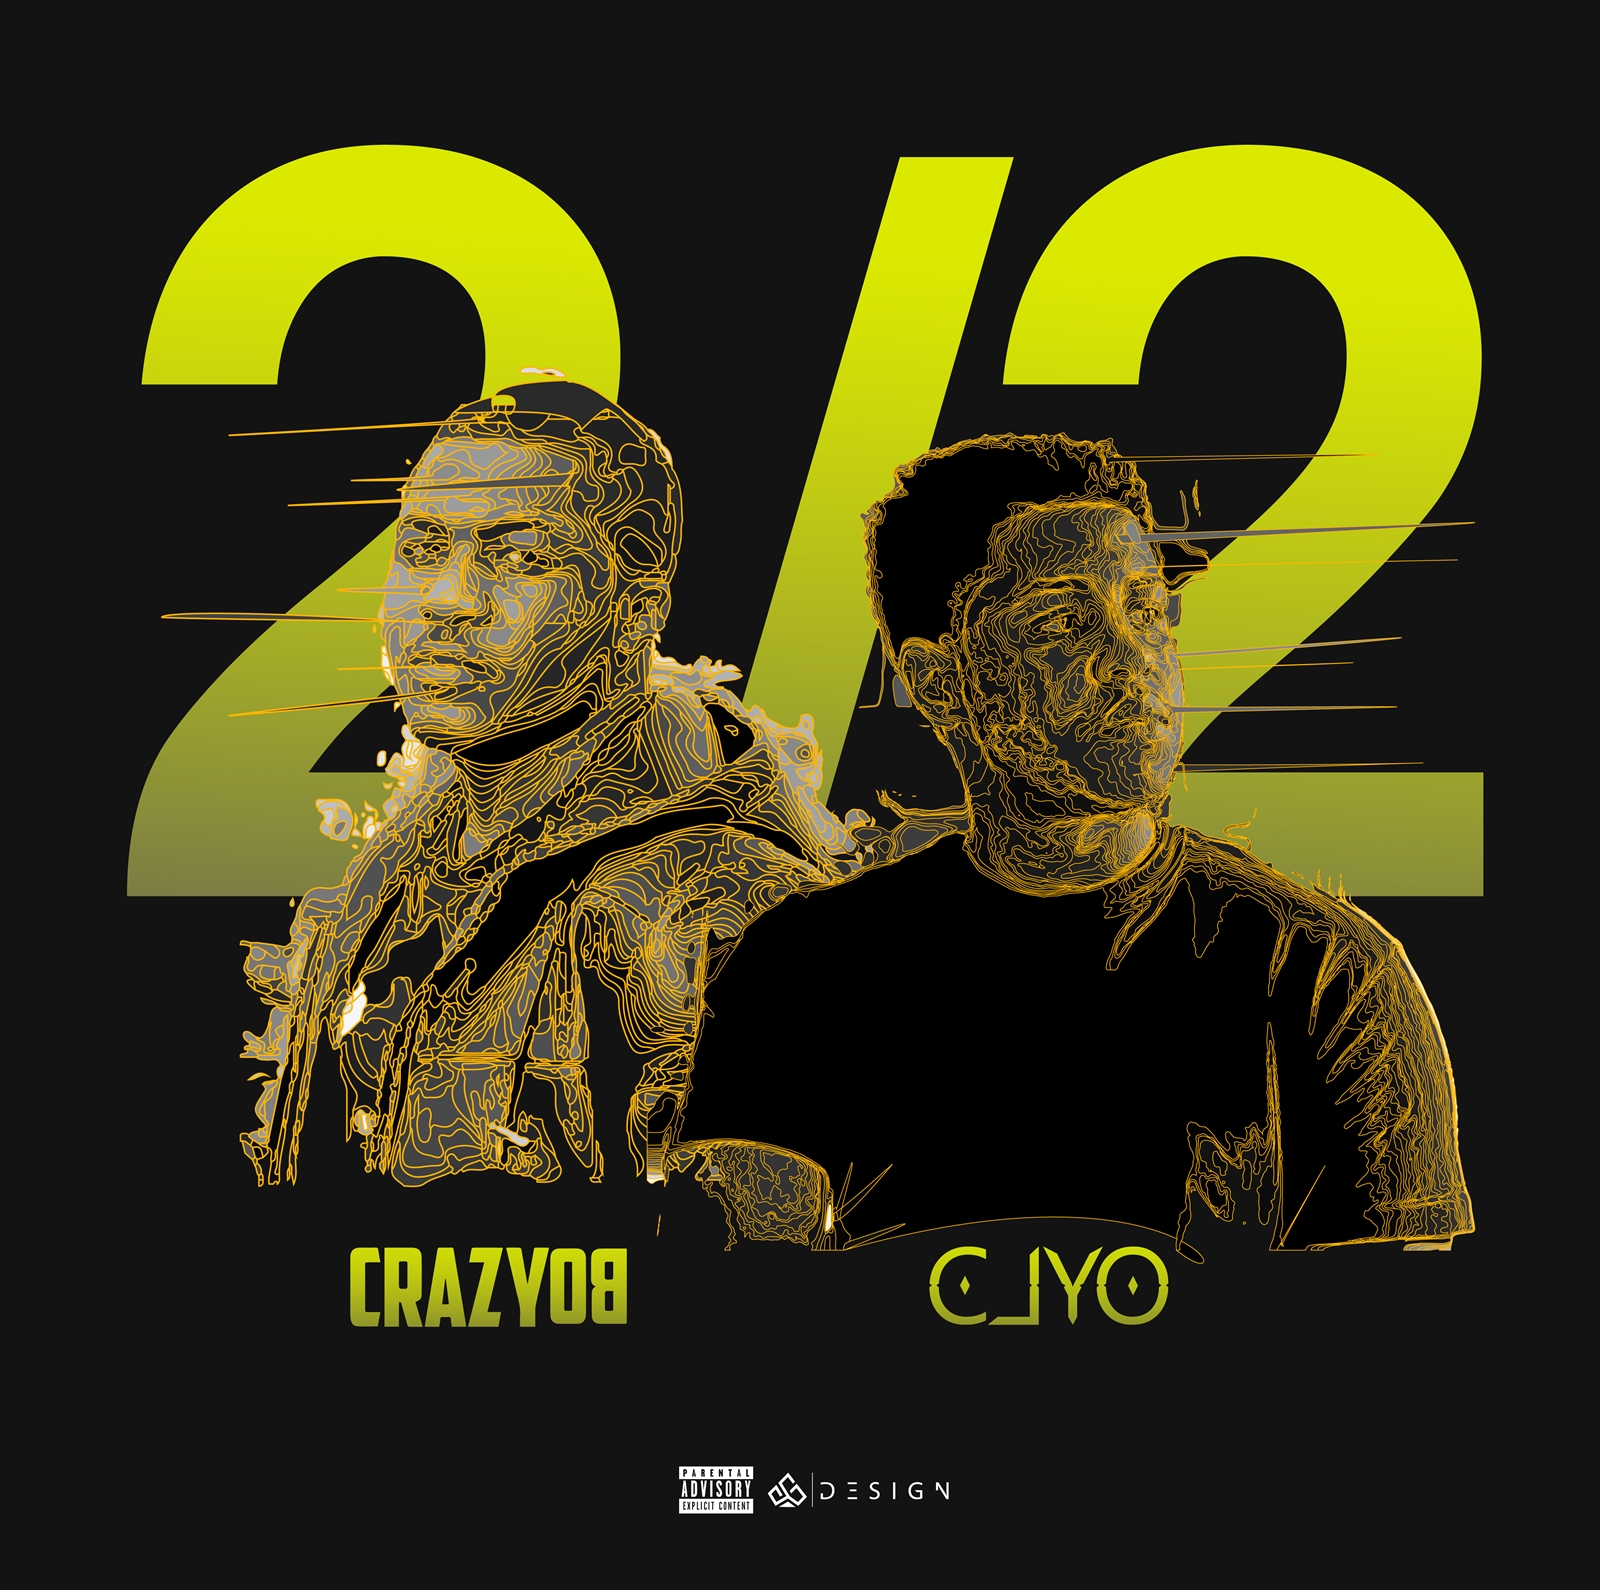 Clyo & Crazy Boy - 2 de 2